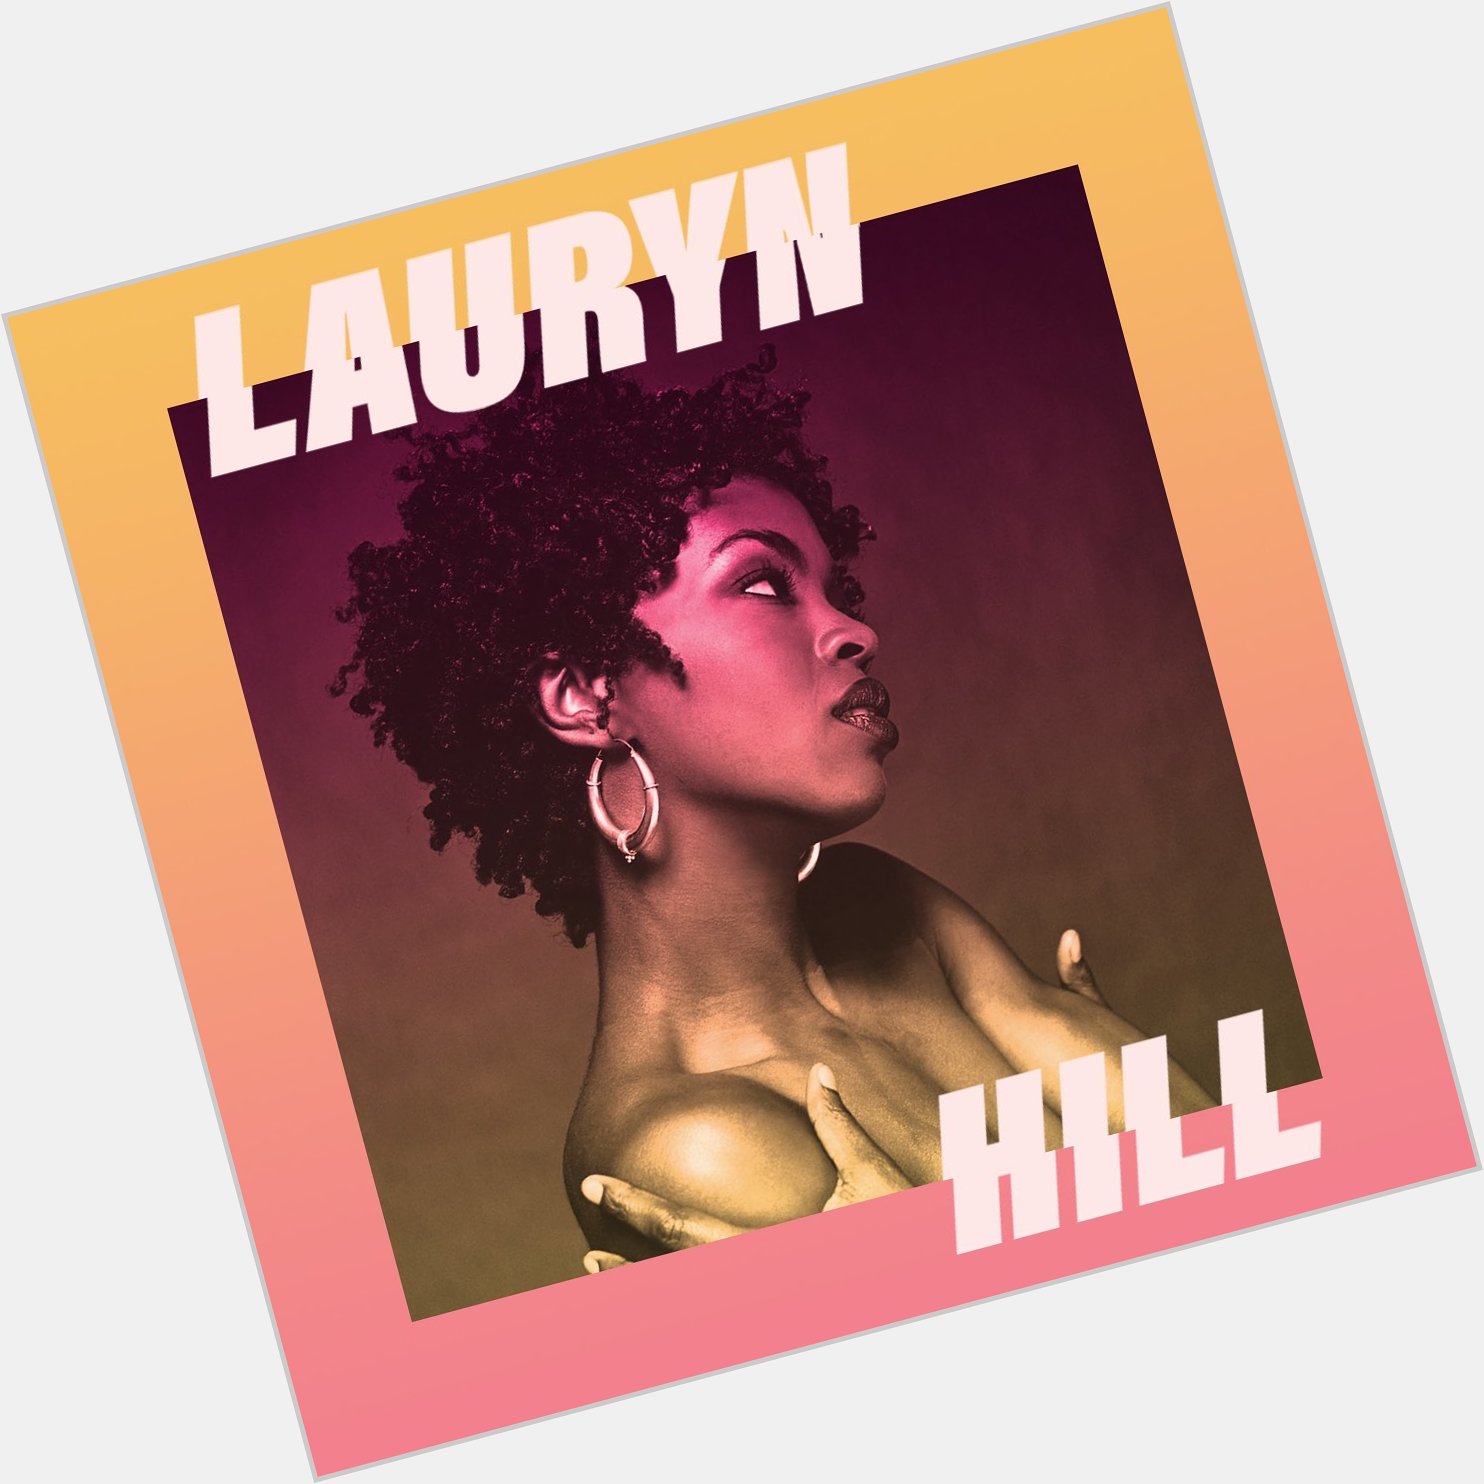 Wishing iconic Hip Hop/R&B artist Ms. Lauryn Hill a happy 45th birthday today!   